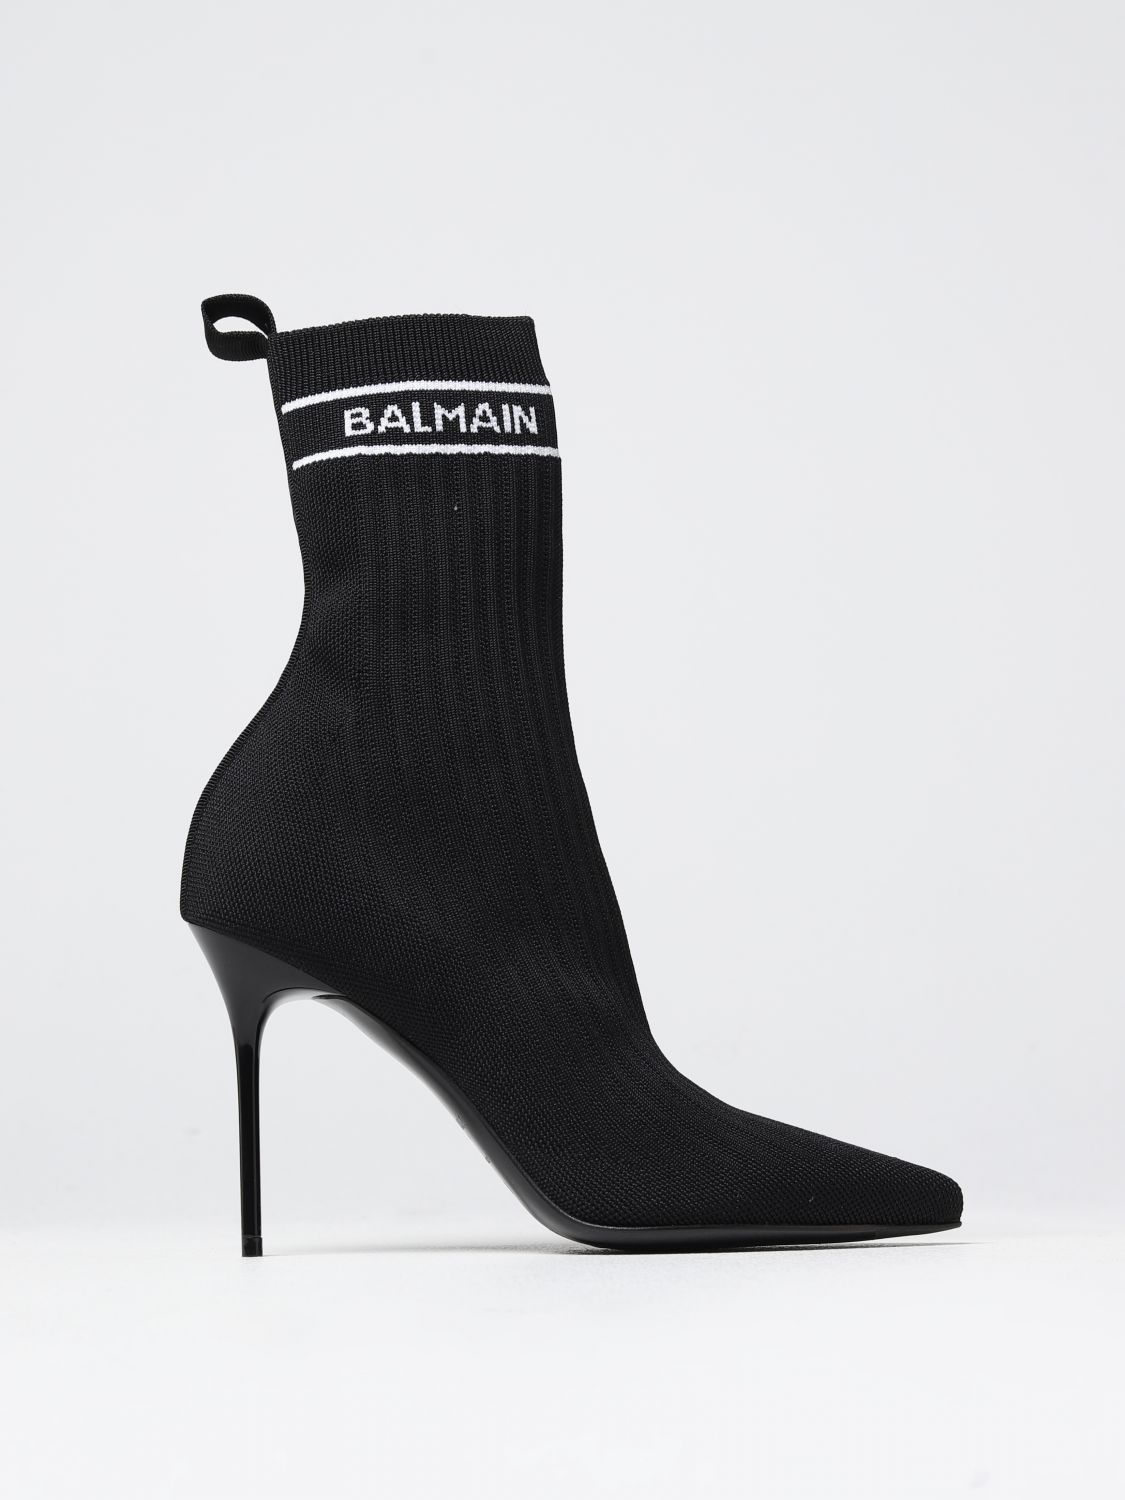 BALMAIN: Skye ankle boot in stretch fabric - Black | Balmain boots ...